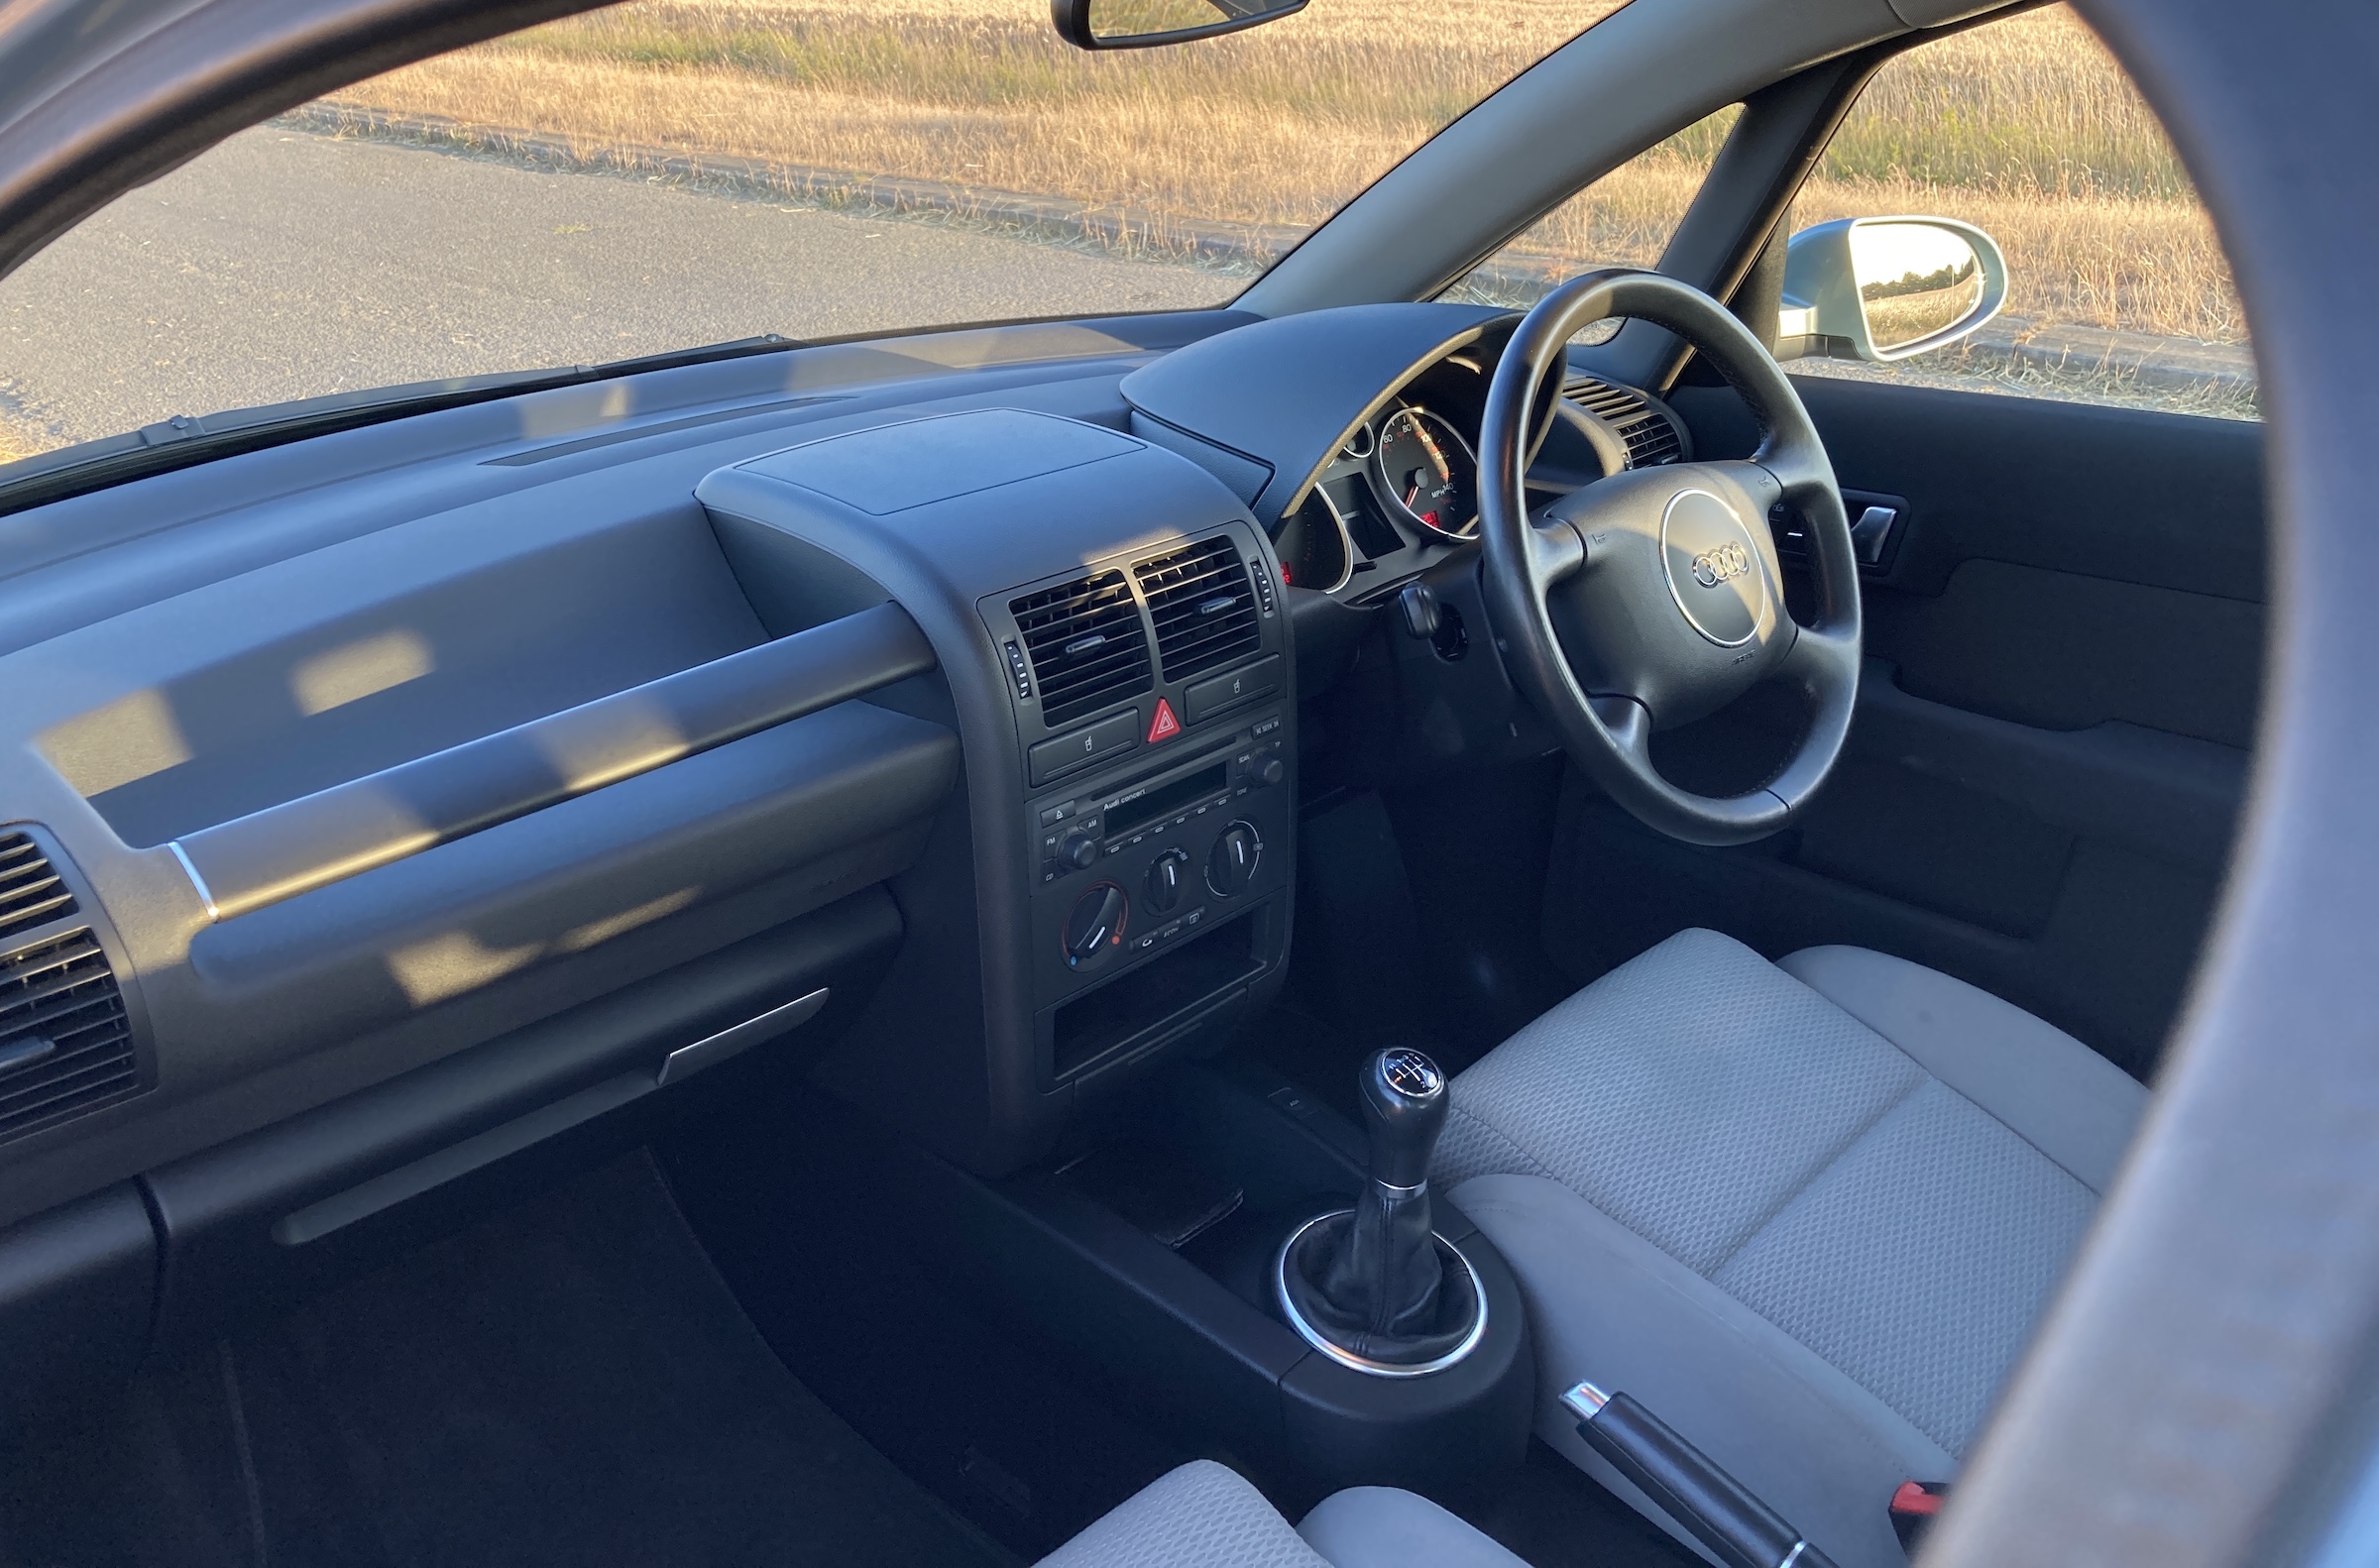 Audi A2 interior